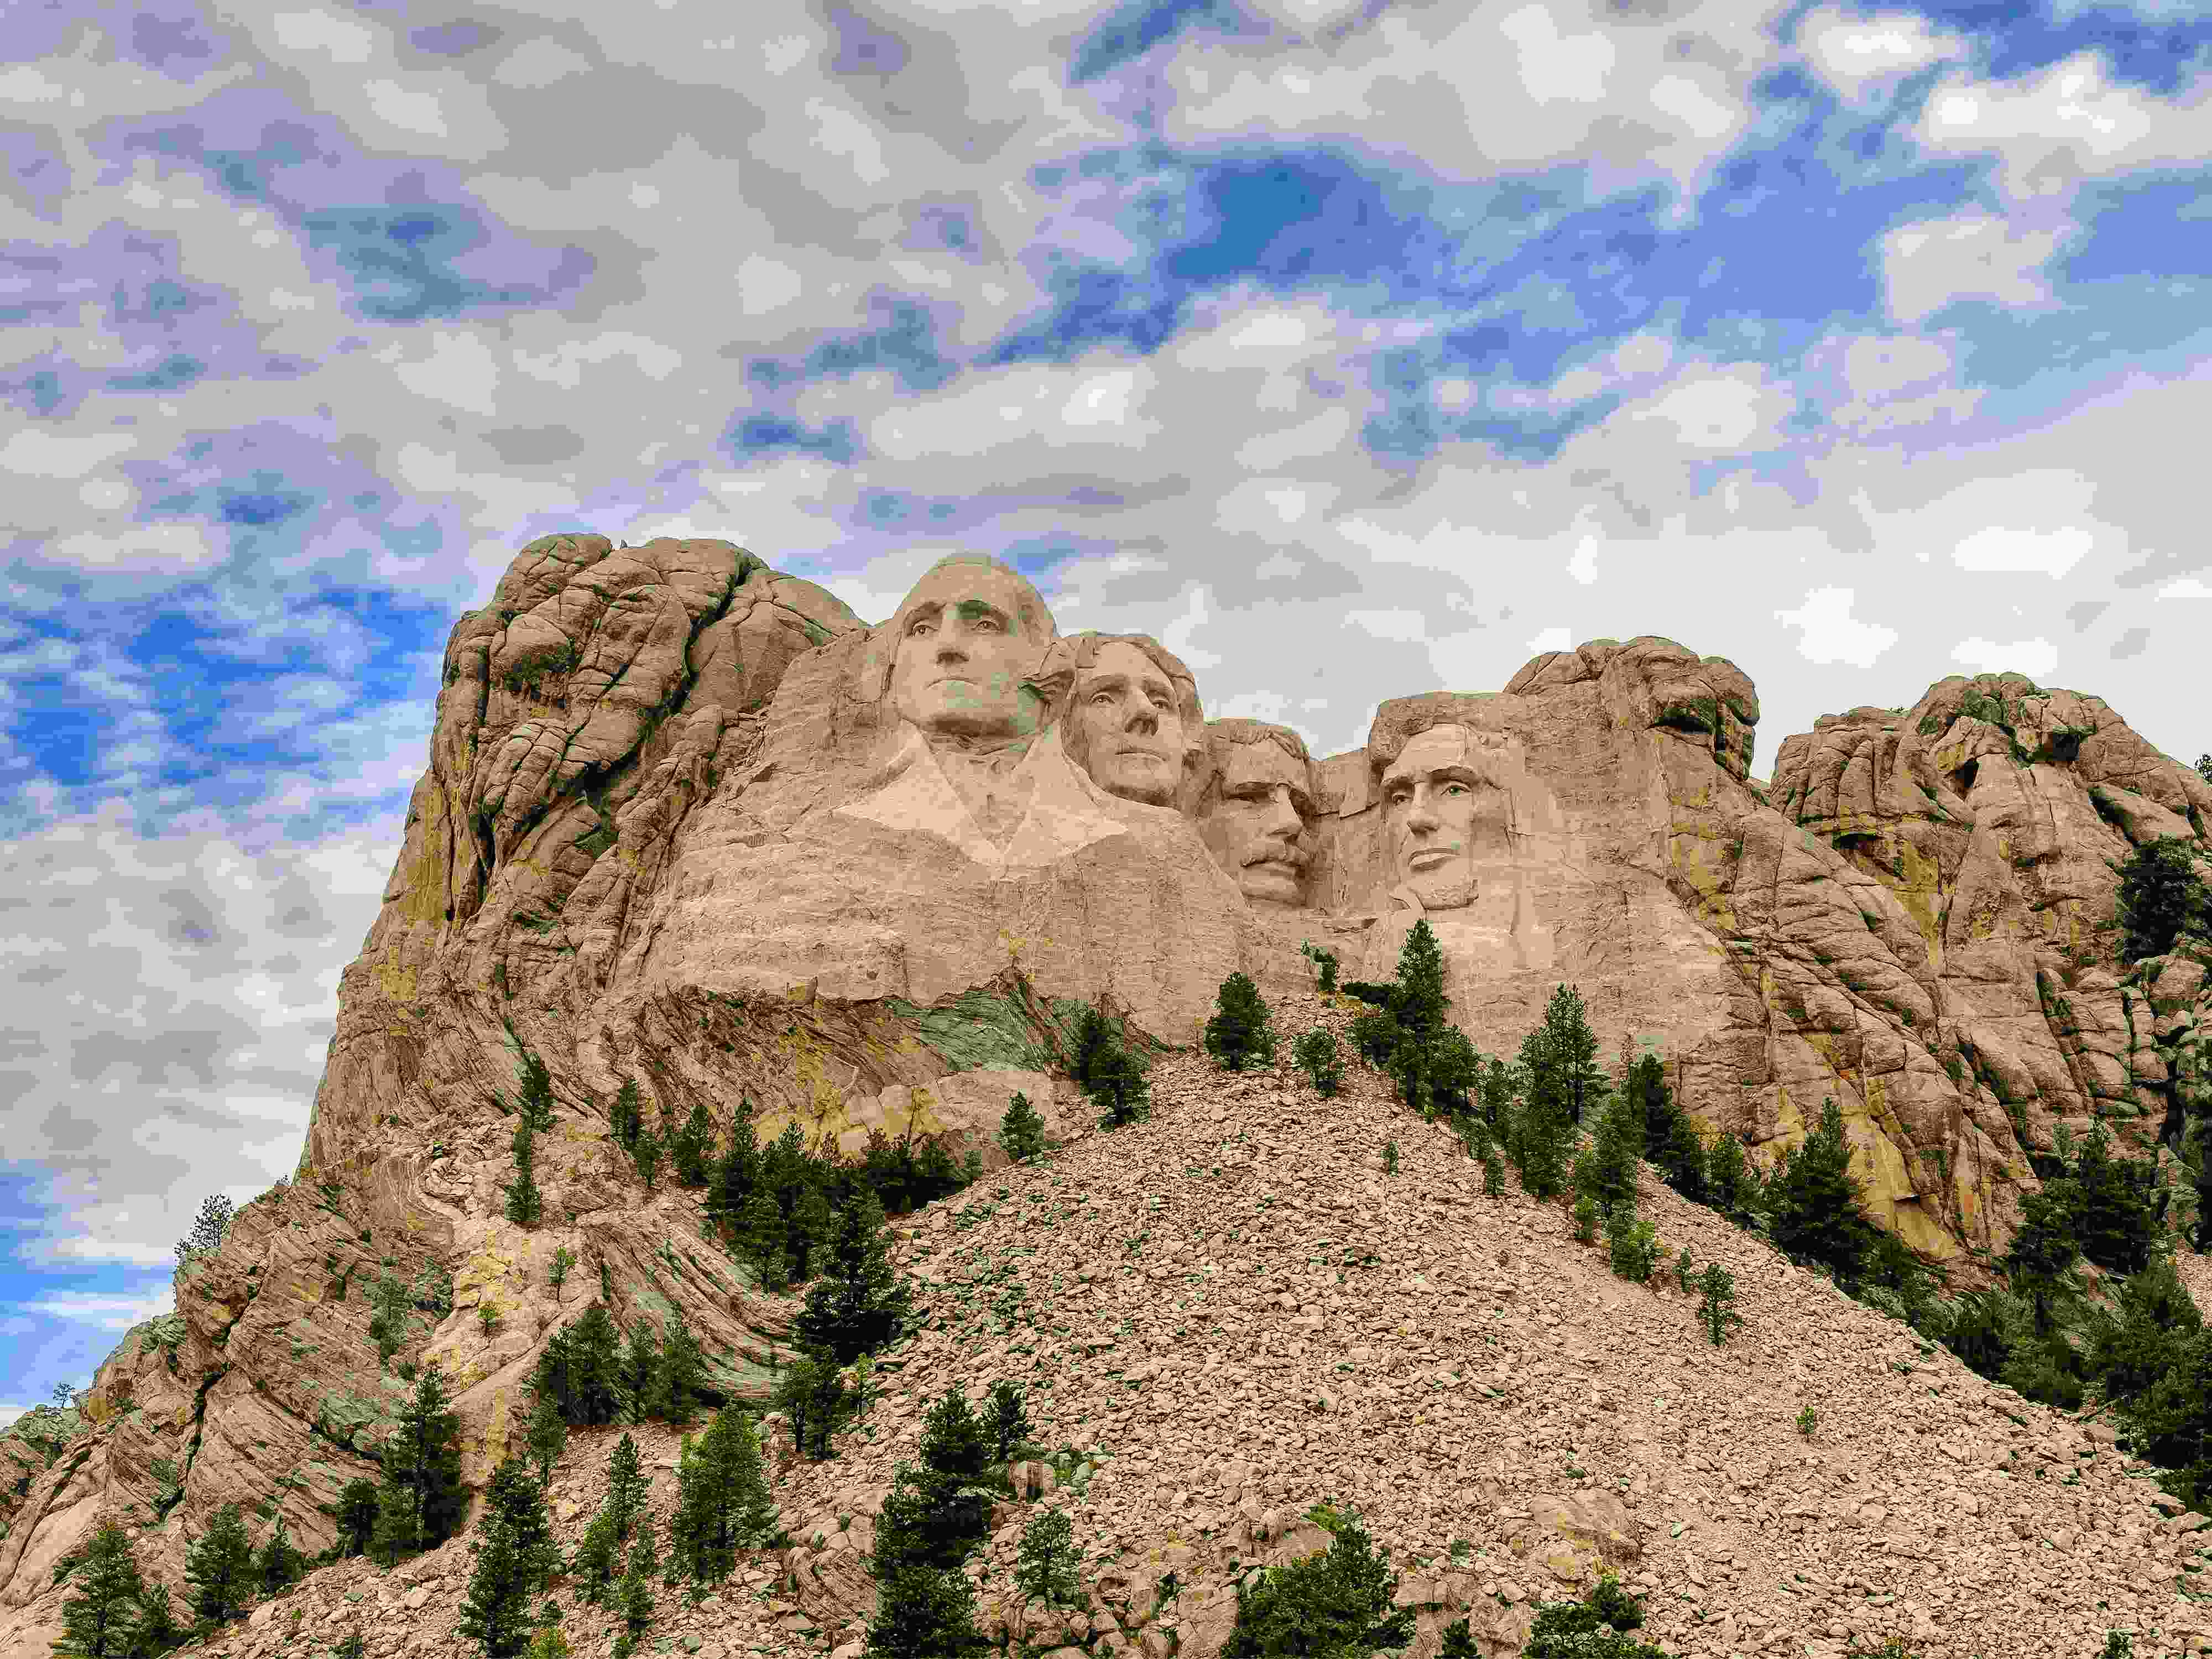 Mount Rushmore, open year round.  America's Shrine of Democracy